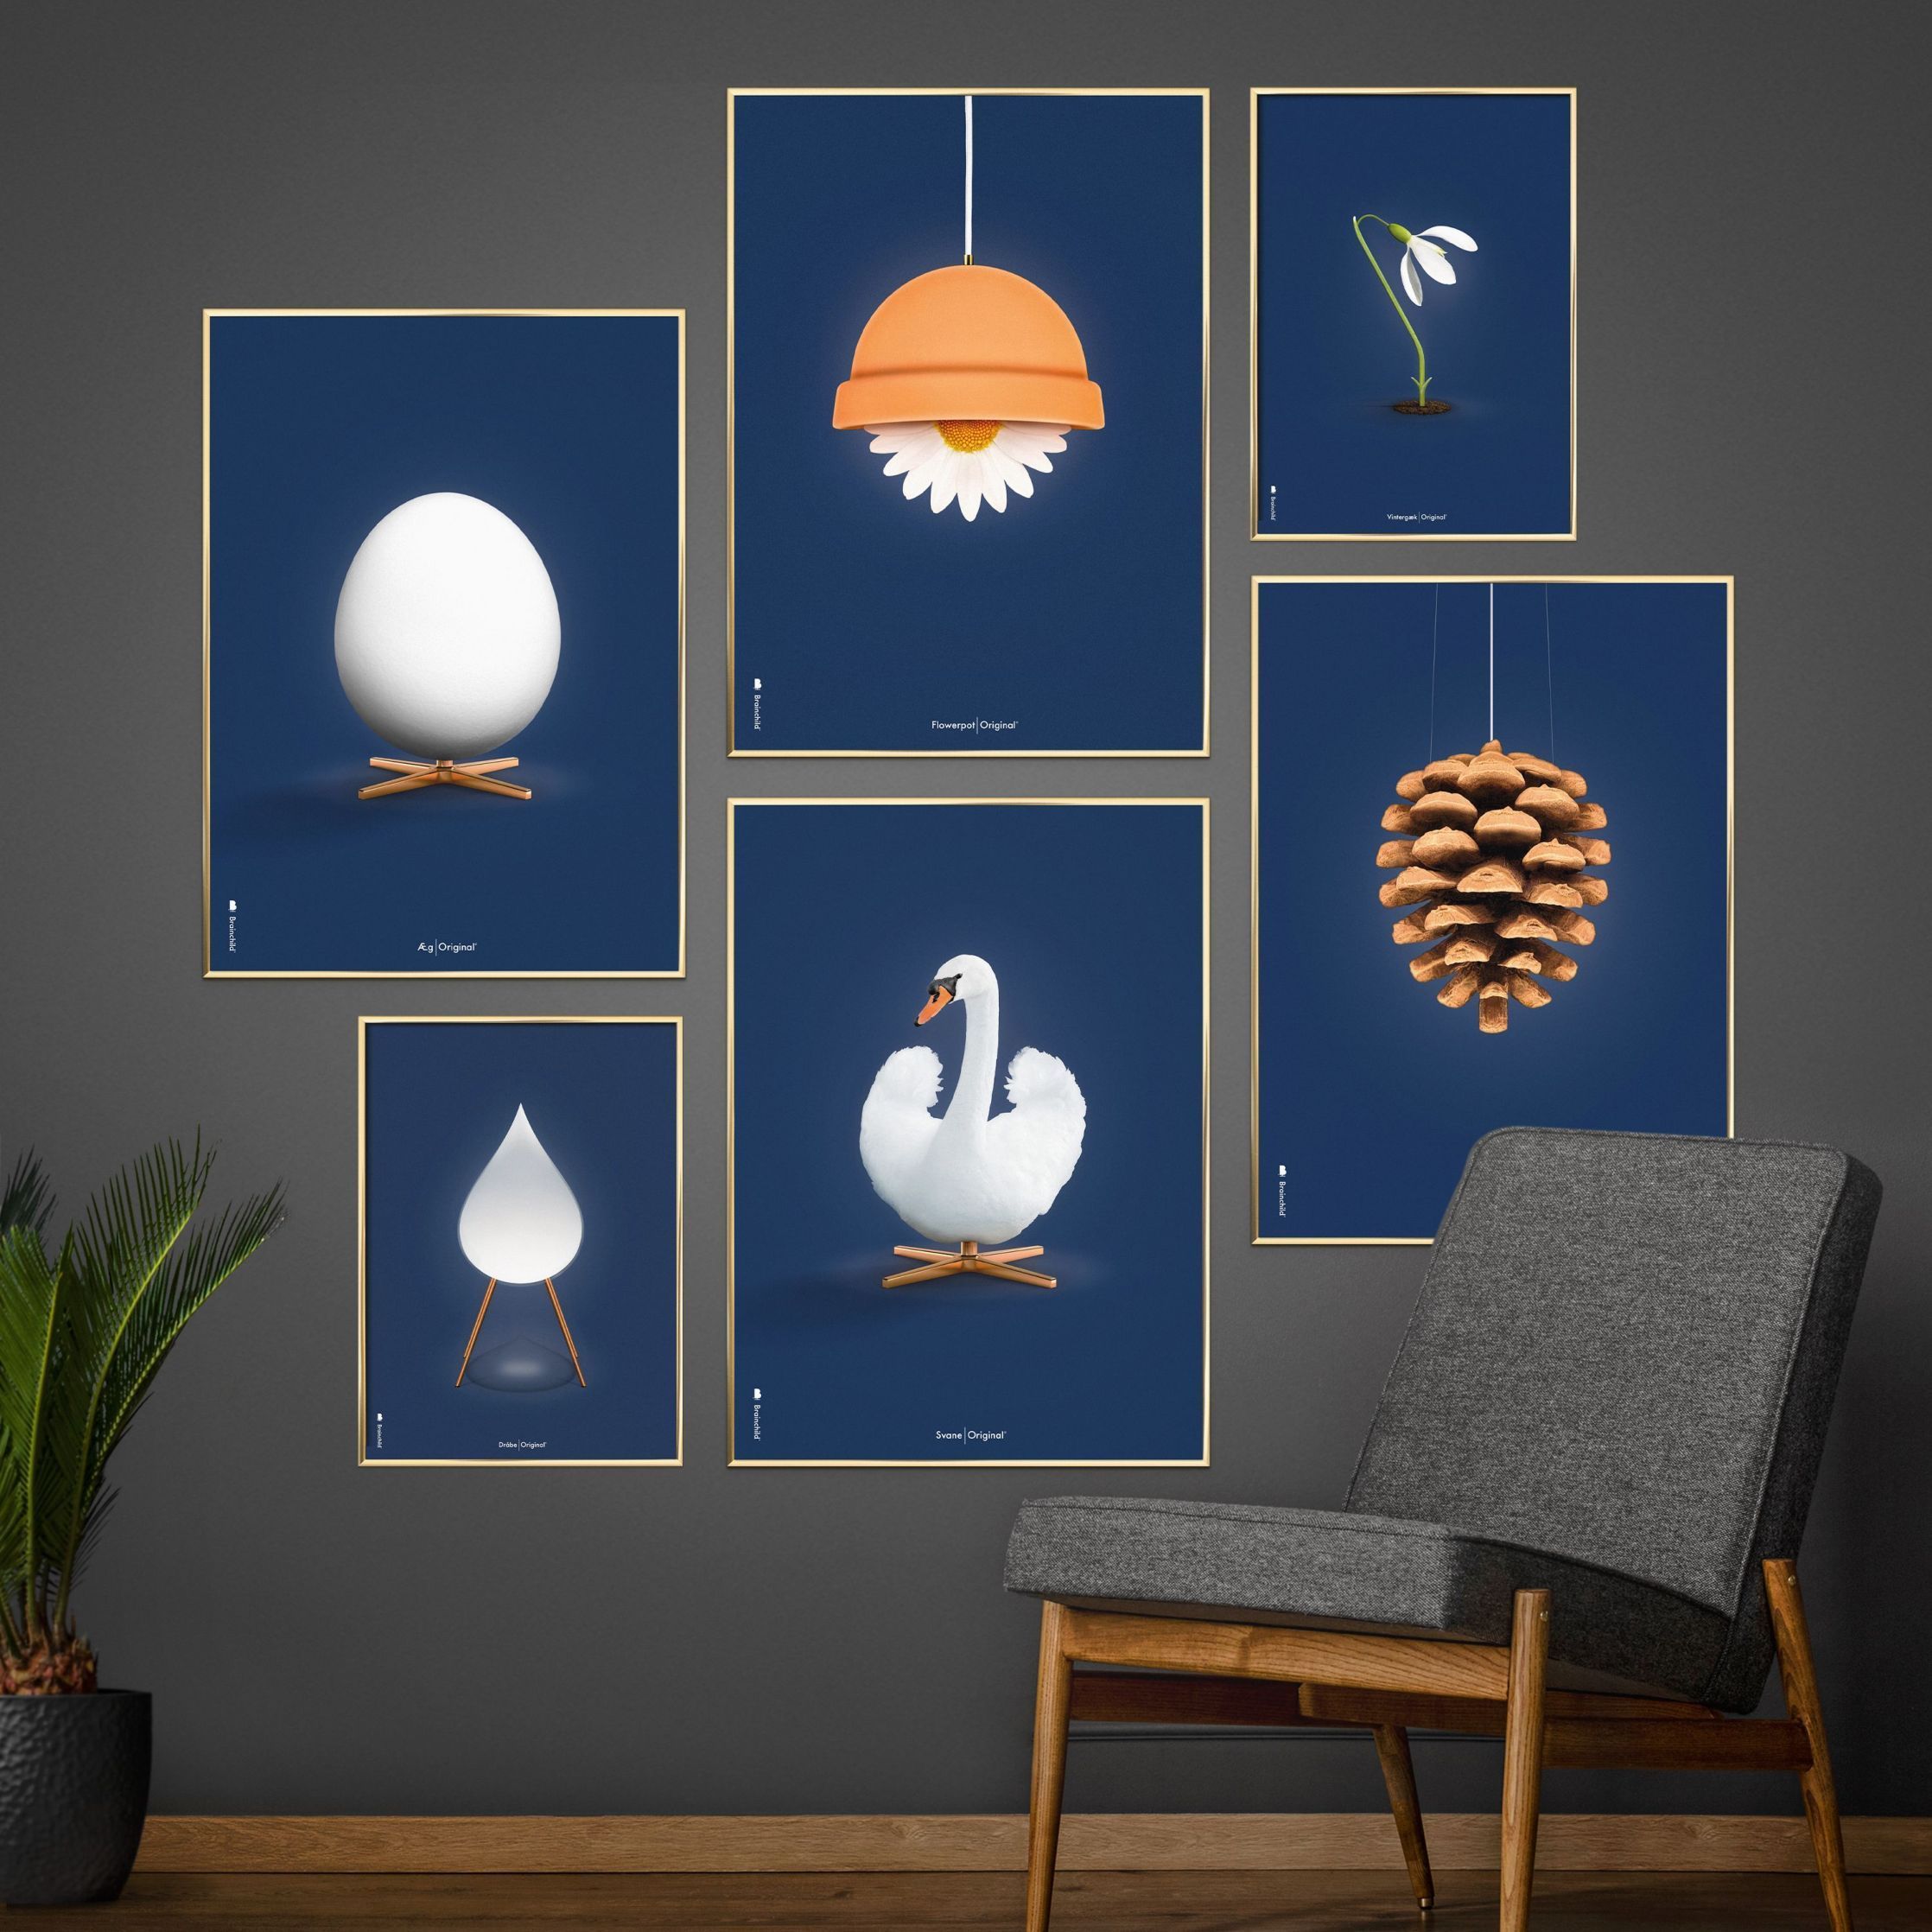 Brainchild Flowerpot Classic Poster, Frame Made Of Light Wood 50x70 Cm, Dark Blue Background